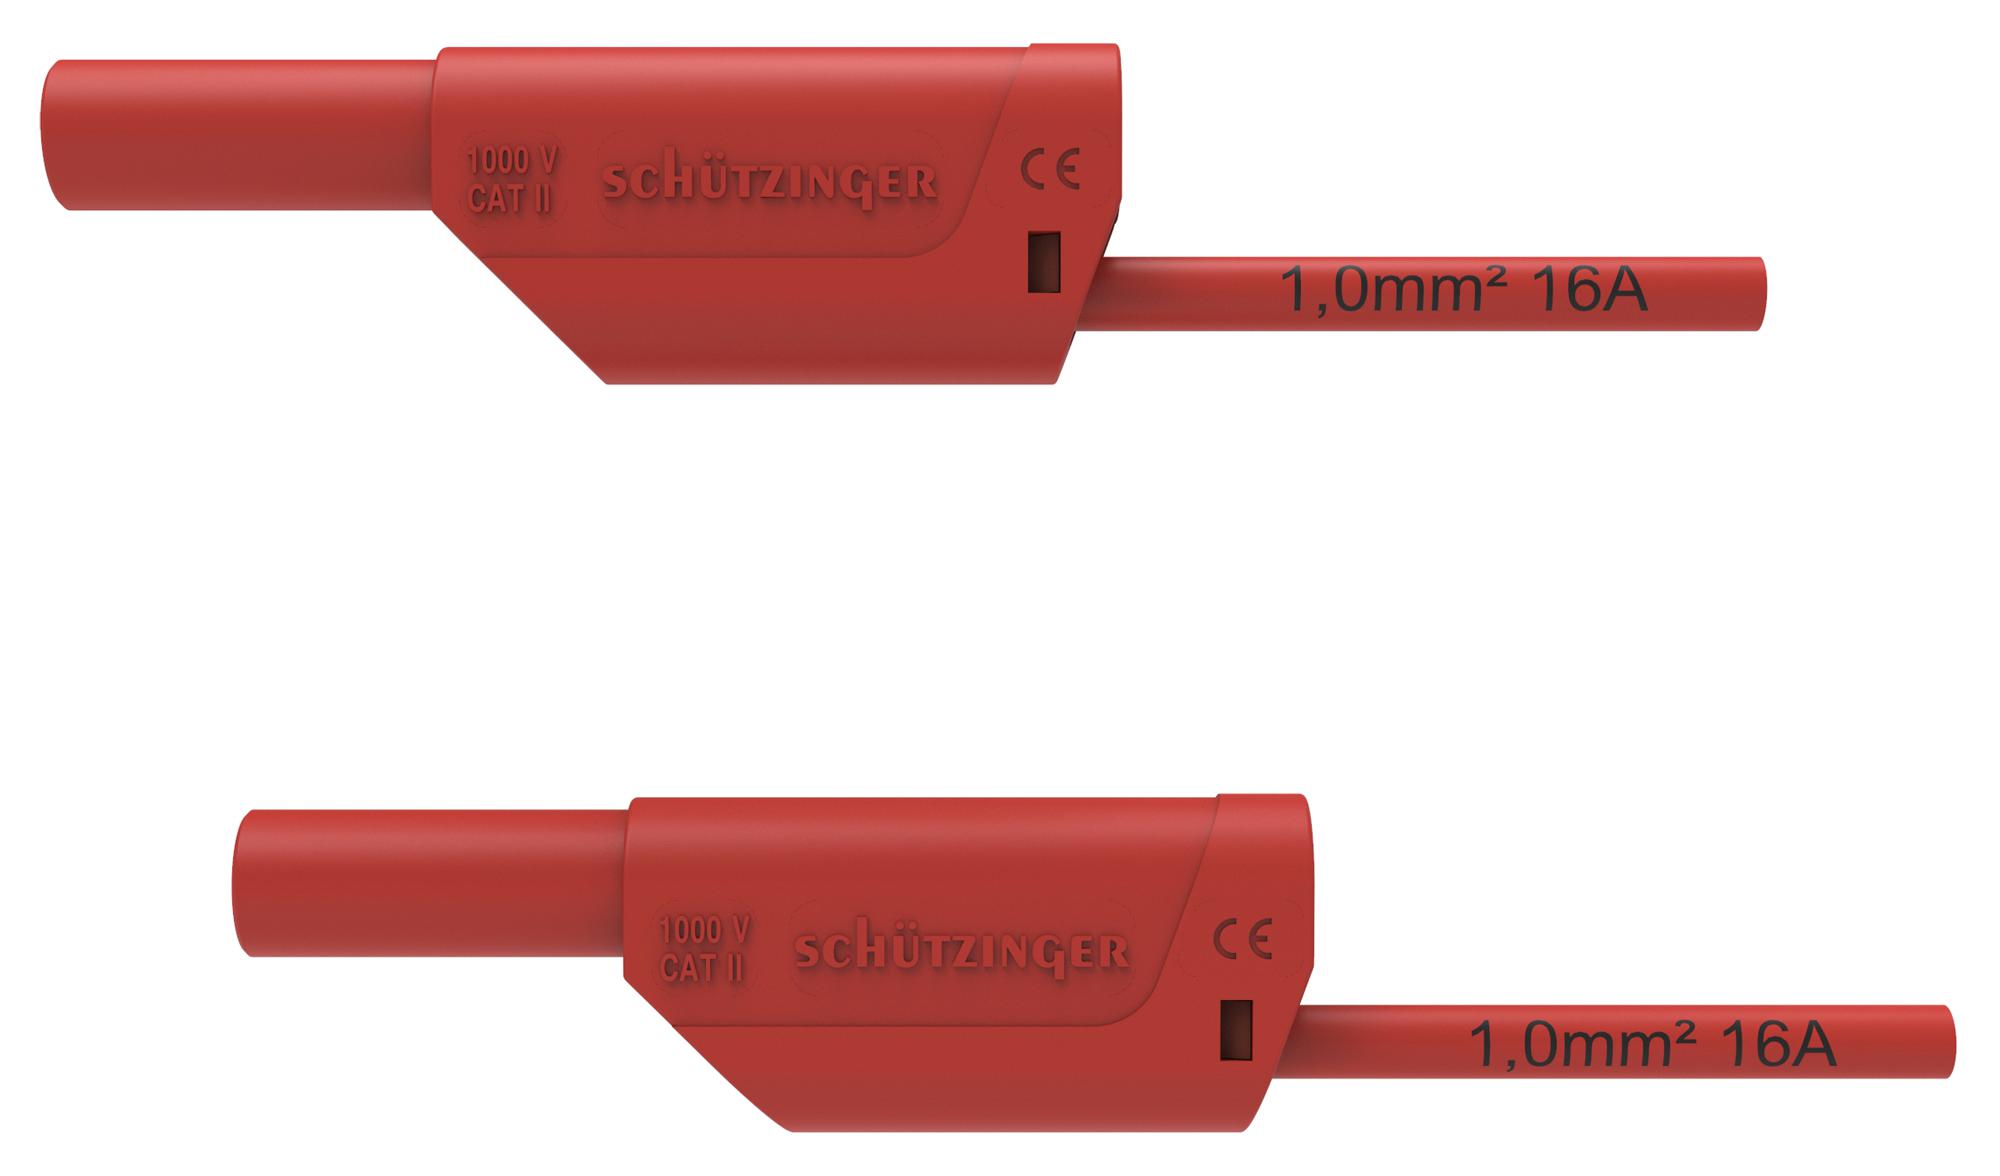 Schutzinger Di Vsfk 8500 / 1 / 50 / Rt 4mm Banana Plug-Sq, Shrouded, Red, 500mm